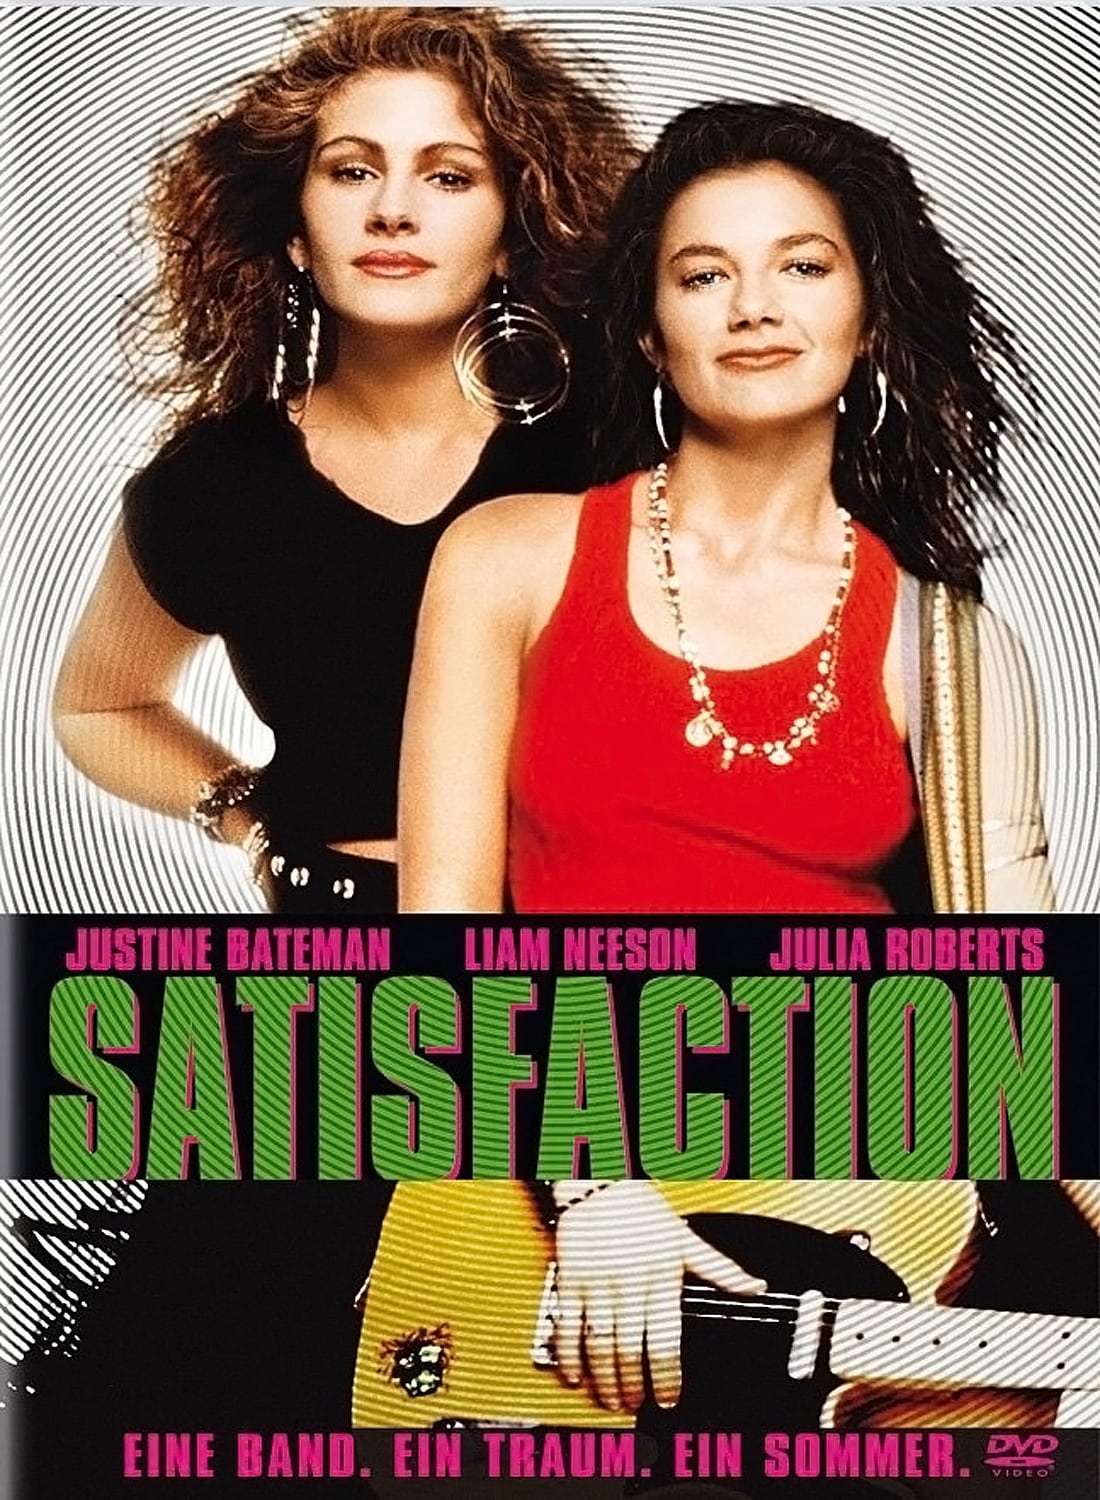 Plakat von "Satisfaction"